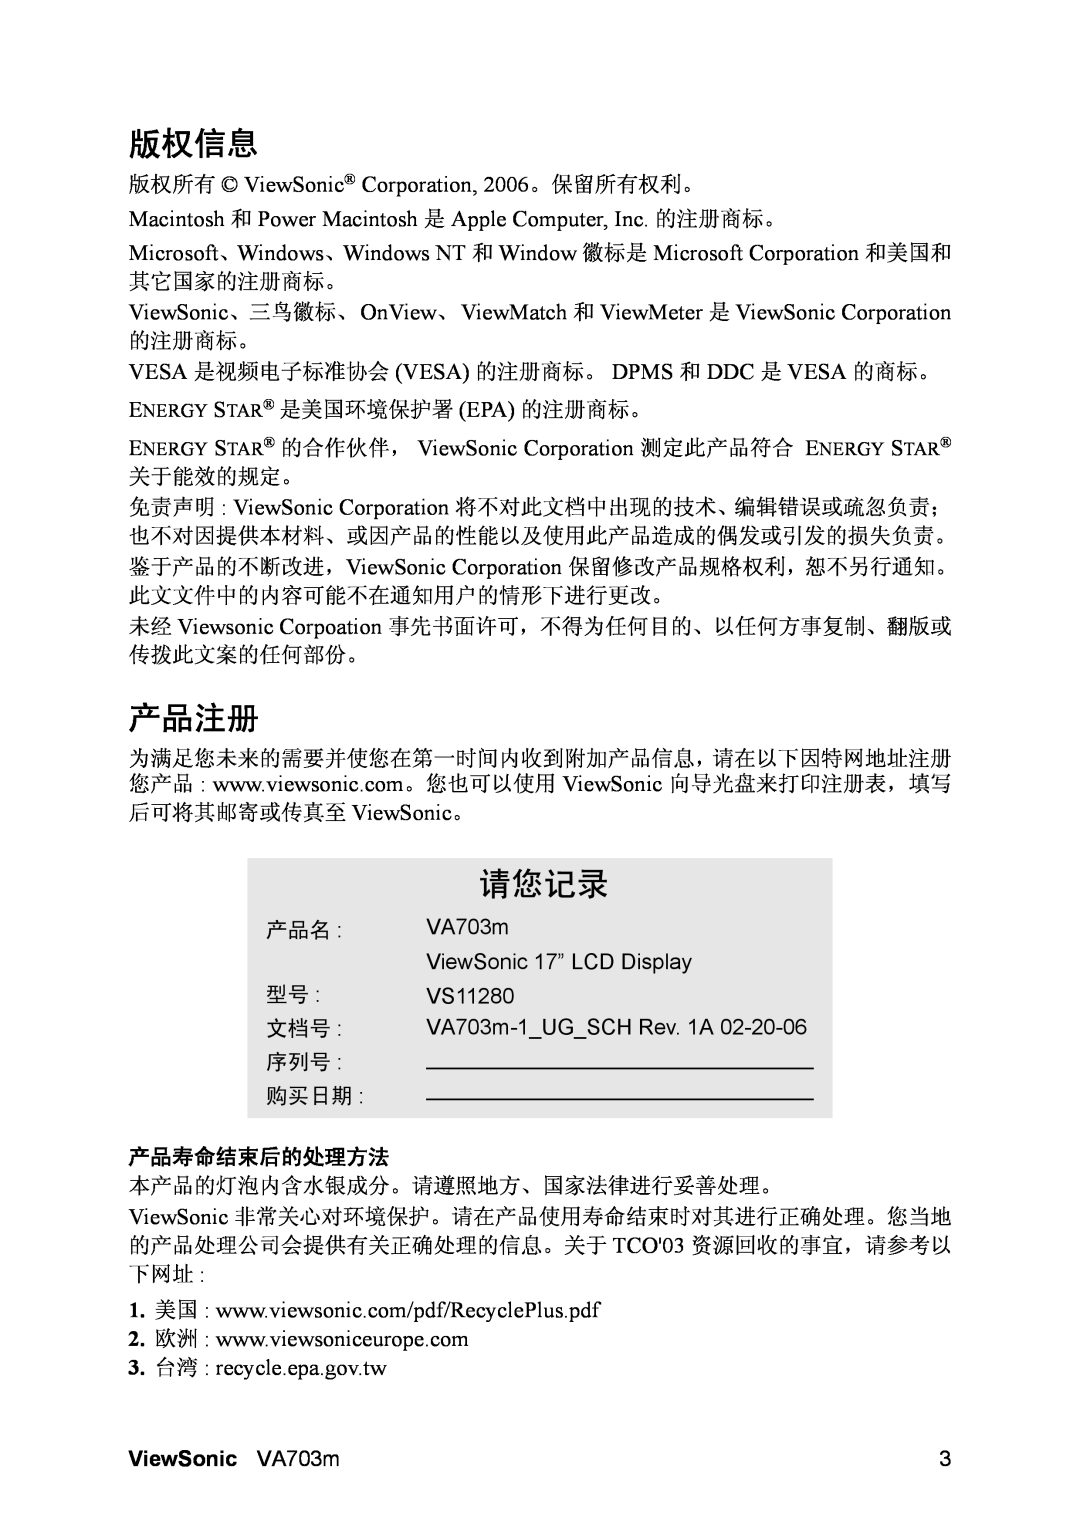 ViewSonic VA703M manual 版权信息, 产品注册, 请您记录, 3.台湾 : recycle.epa.gov.tw, 产品寿命结束后的处理方法, ViewSonic VA703m 